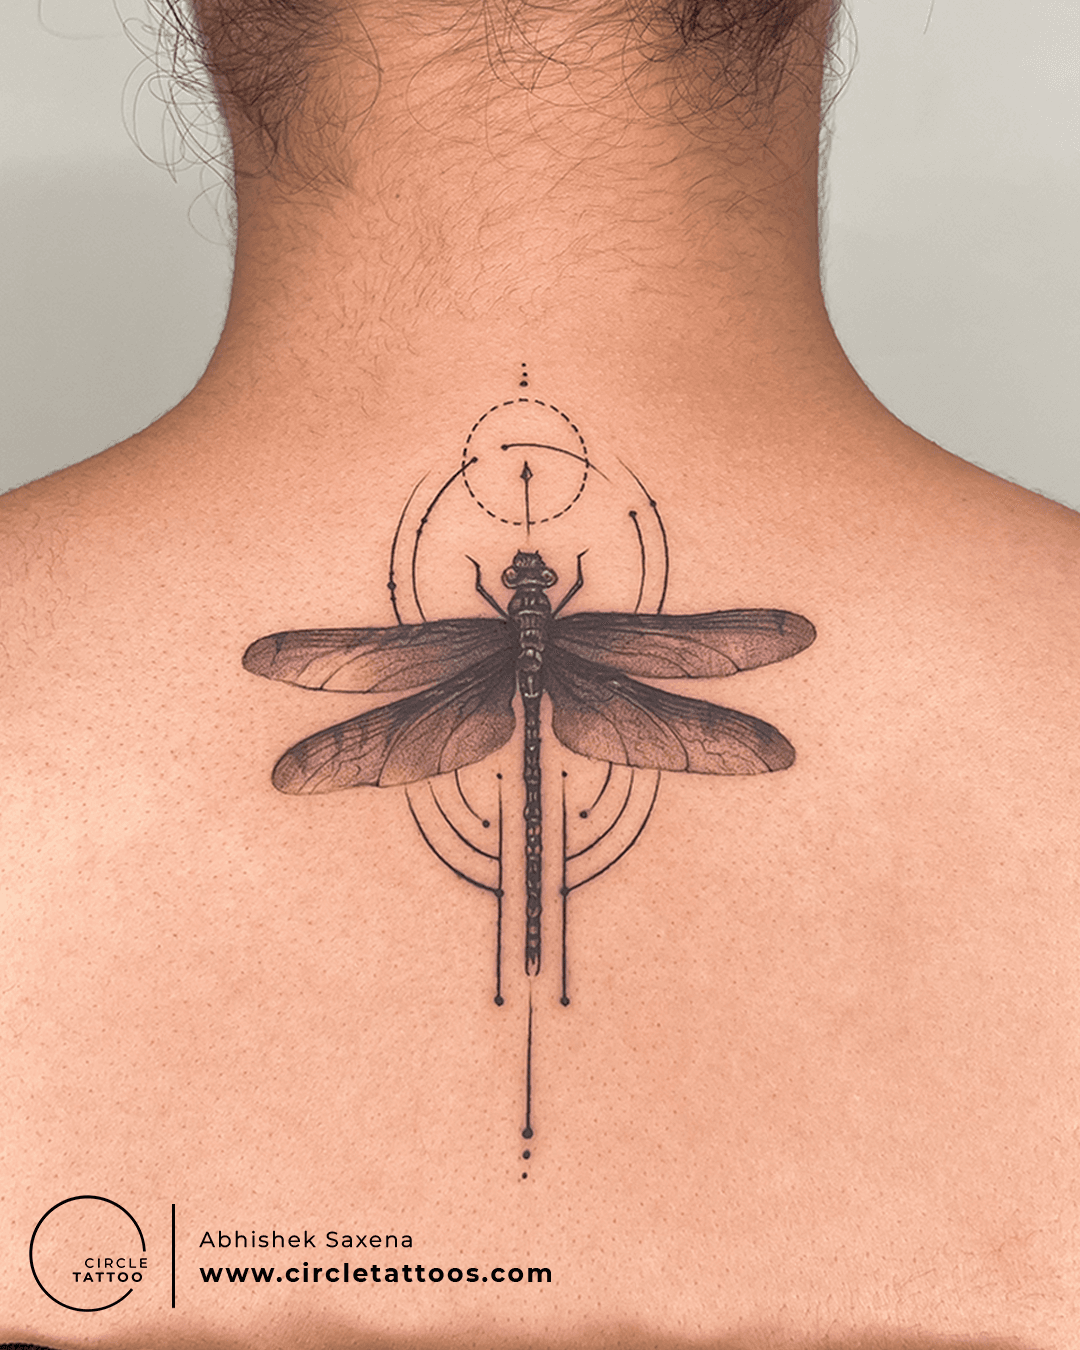 45 Fascinating Dragonfly Tattoo Designs - TattooBlend